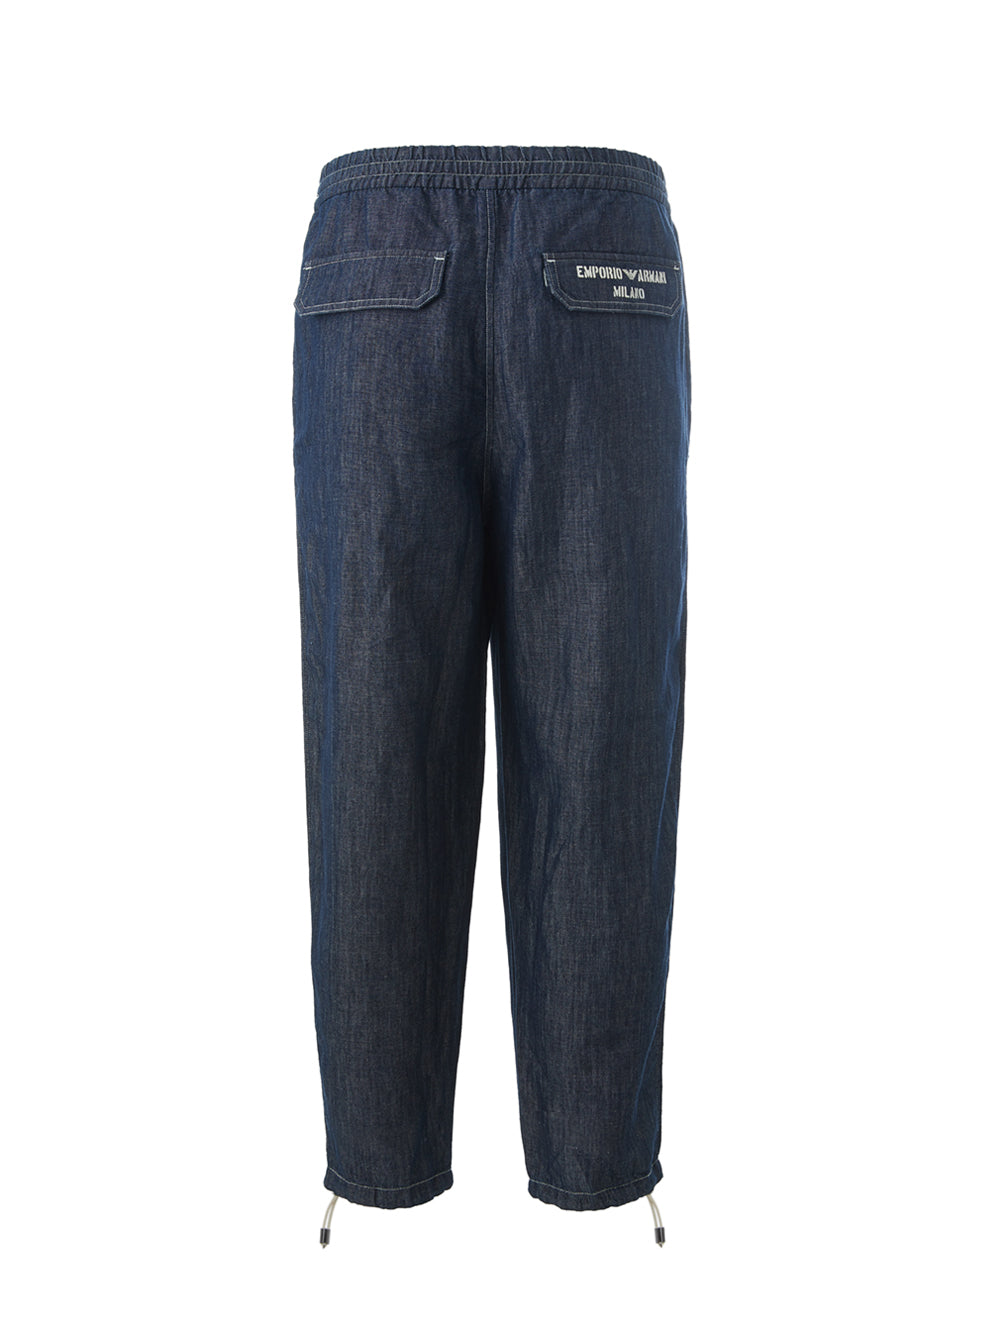 Emporio Armani trousers with elastic waist